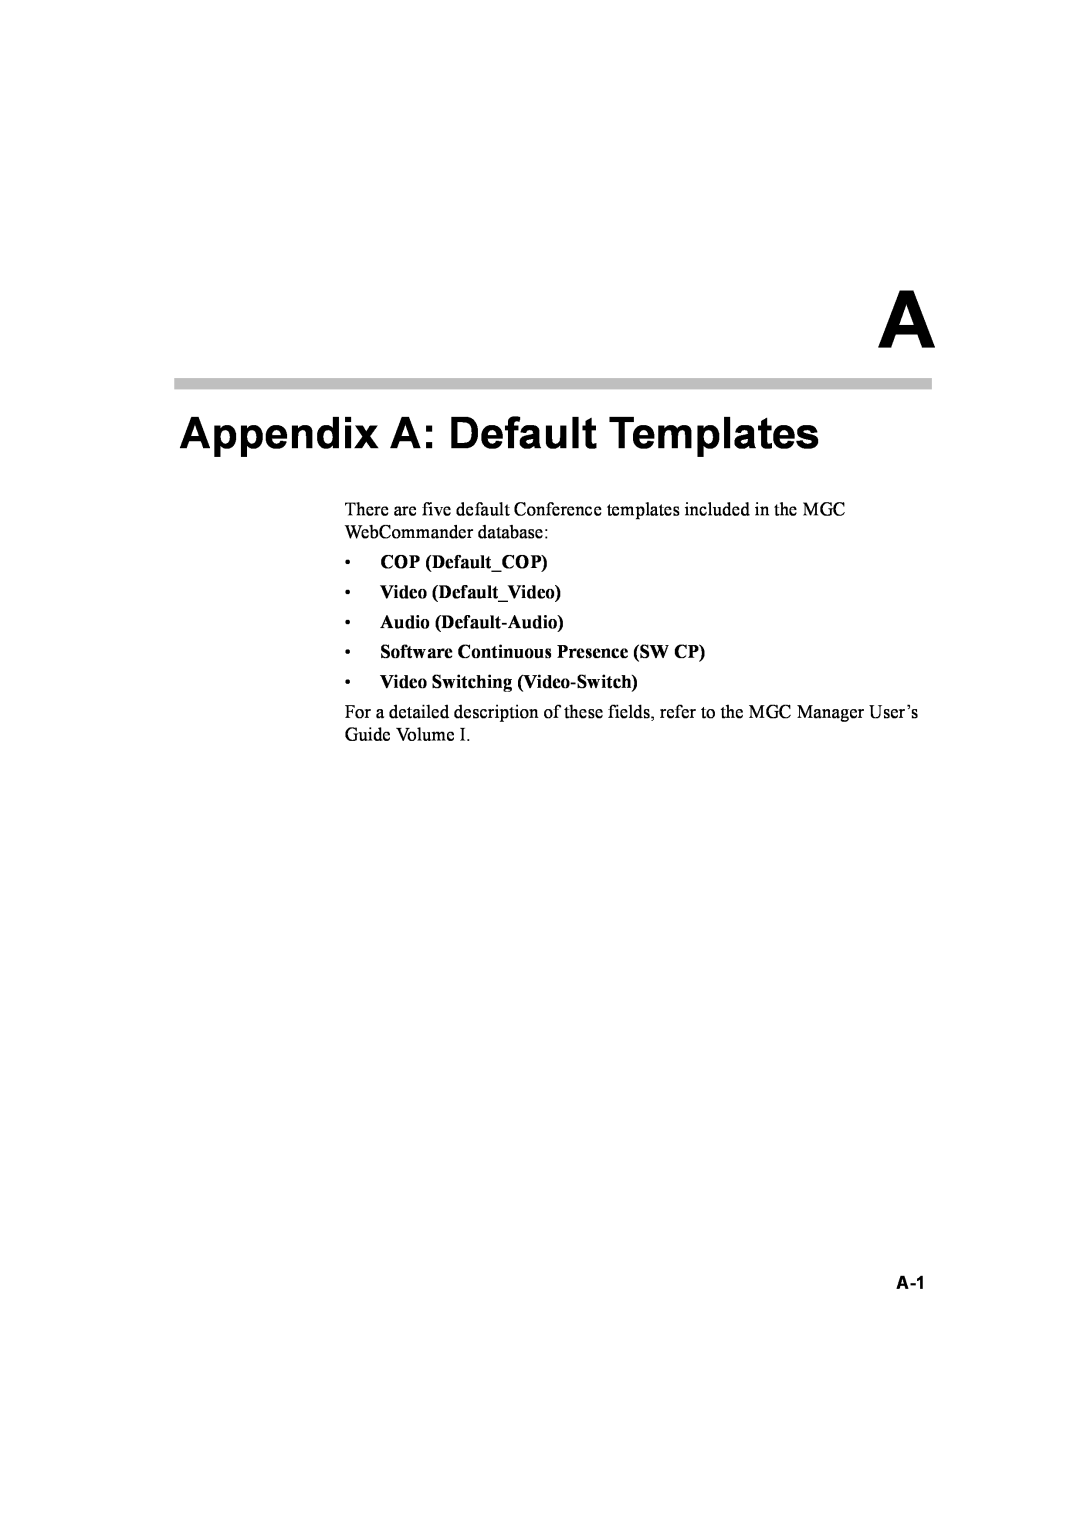 Polycom 8 quick start Appendix A Default Templates, COP Default COP Video Default Video, Audio Default-Audio 